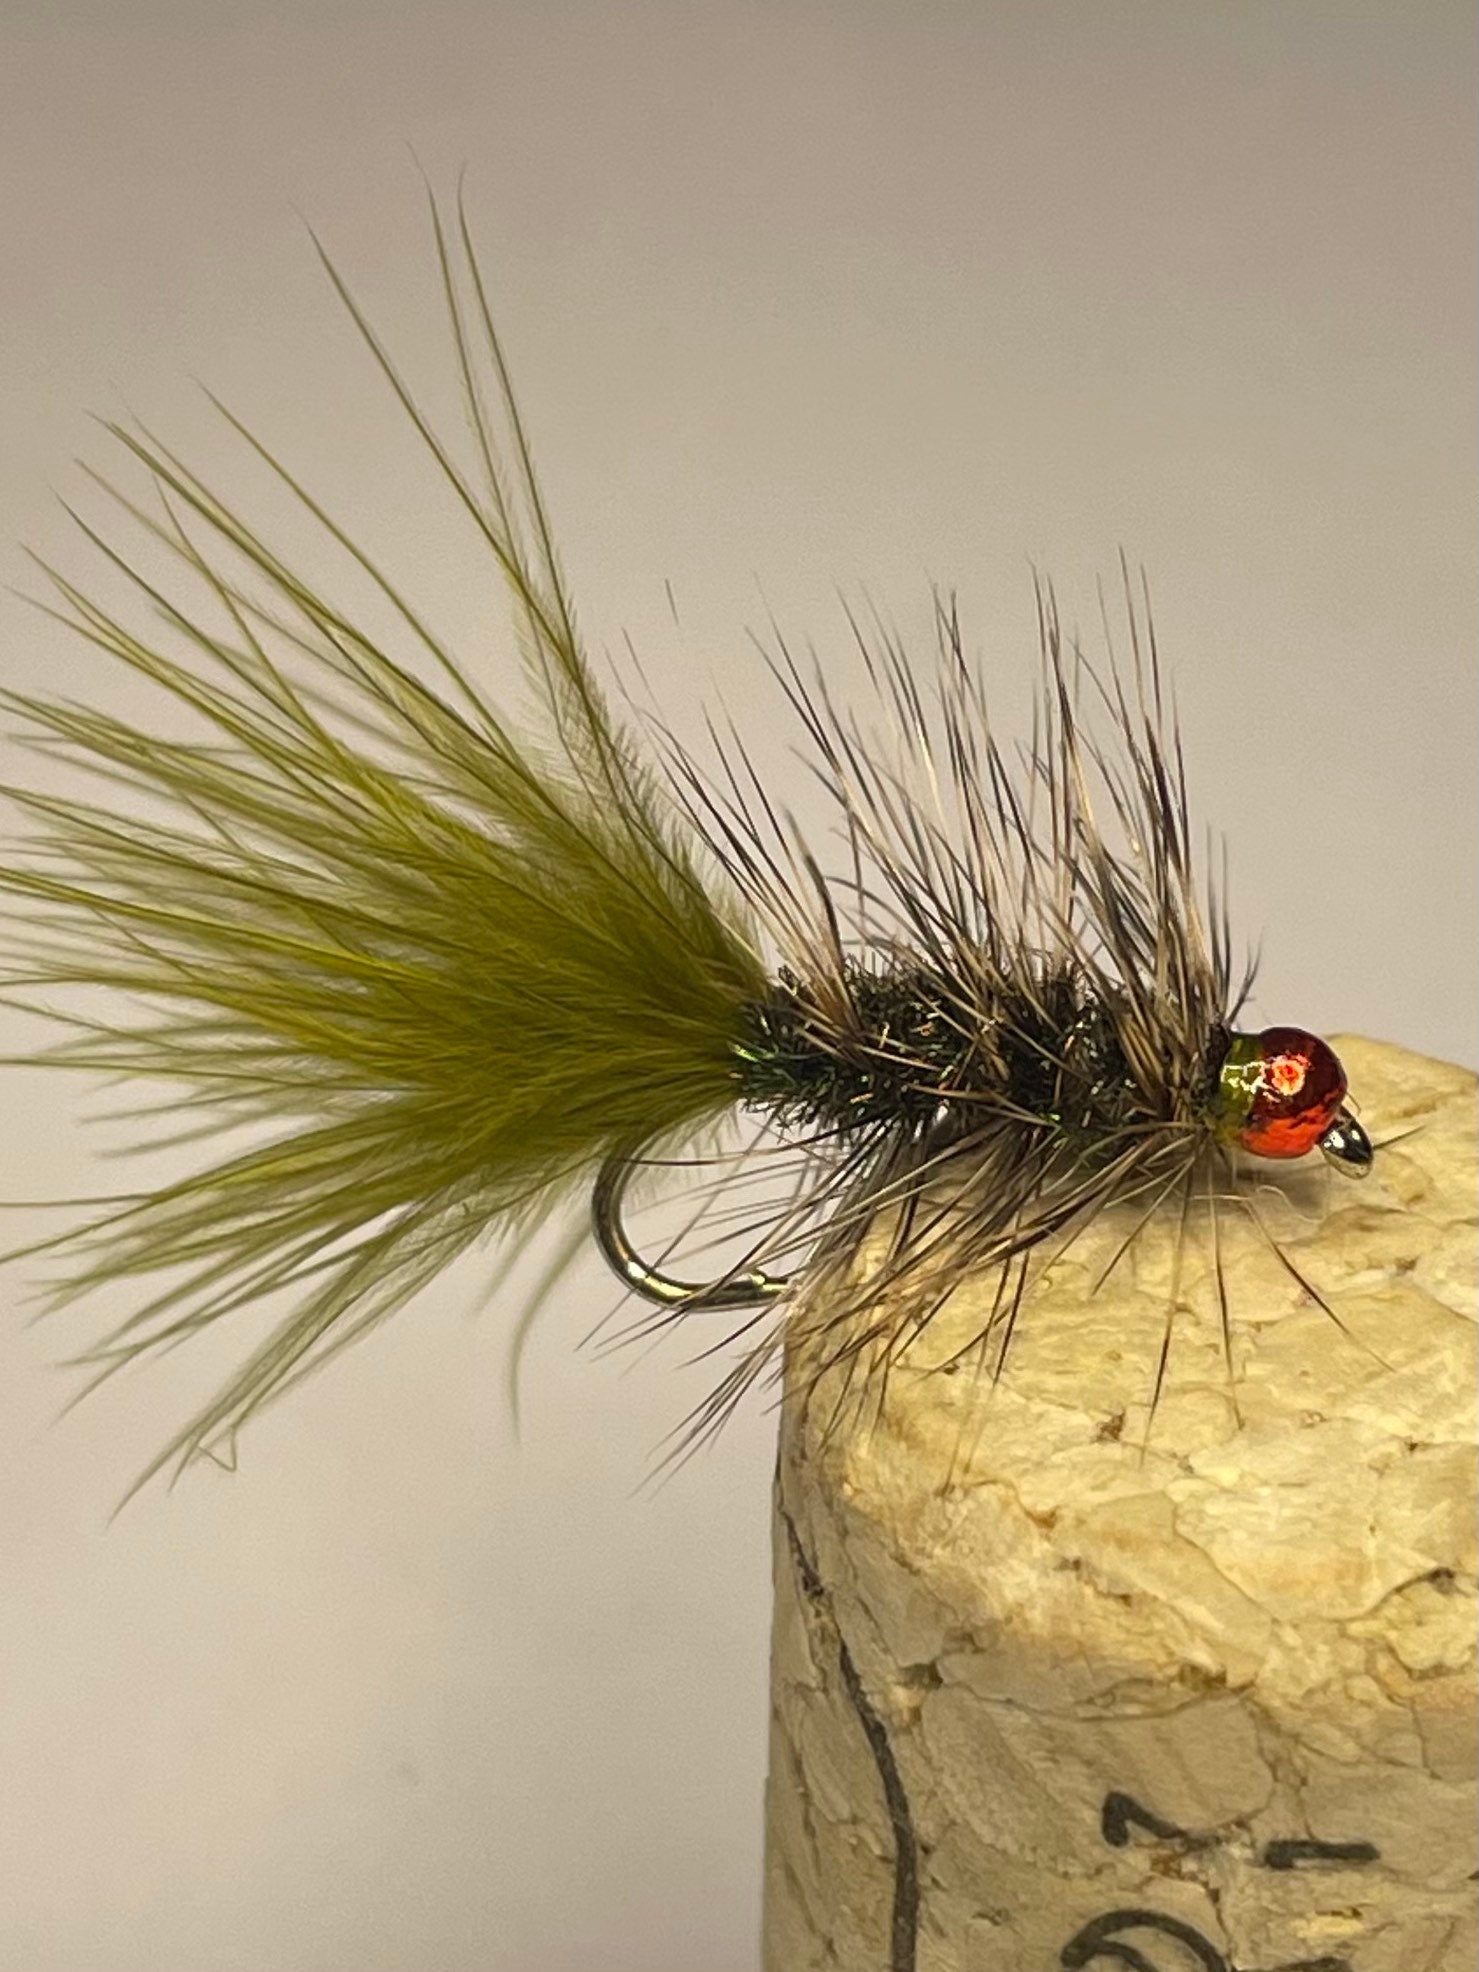 Pumpkin Head Fly Fishing Flies. Set of 3. Tungsten Beads. Nymphs  /attractors / Streamers. 